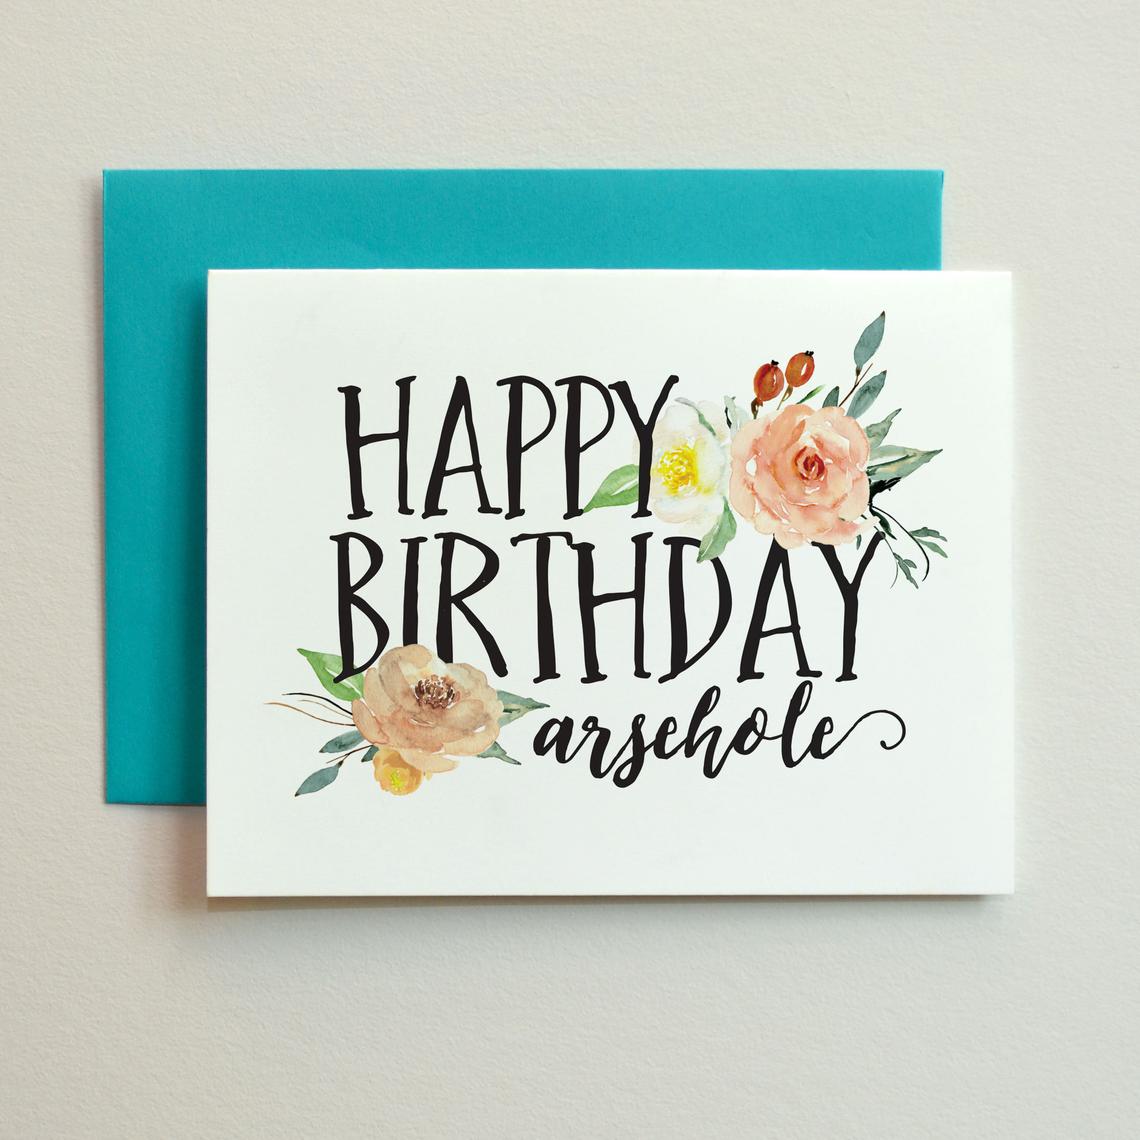 "Happy Birthday Arsehole" Greeting Card